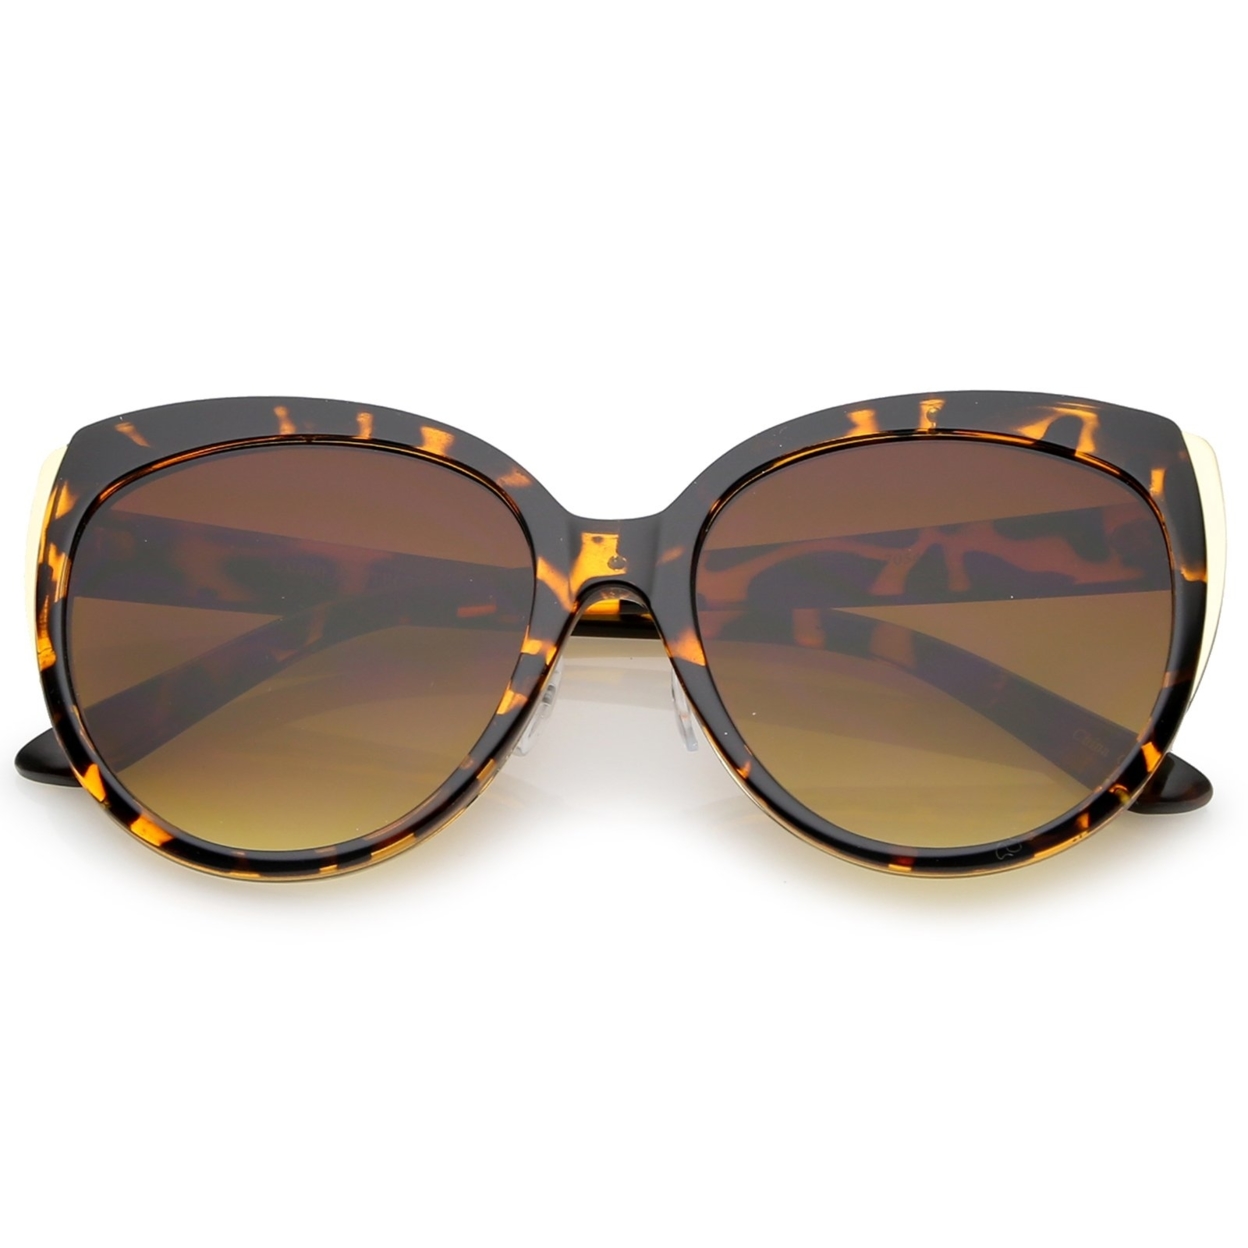 Women's Oversize Metal Trim Round Flat Lens Cat Eye Sunglasses 57mm - Black-Gold / Smoke